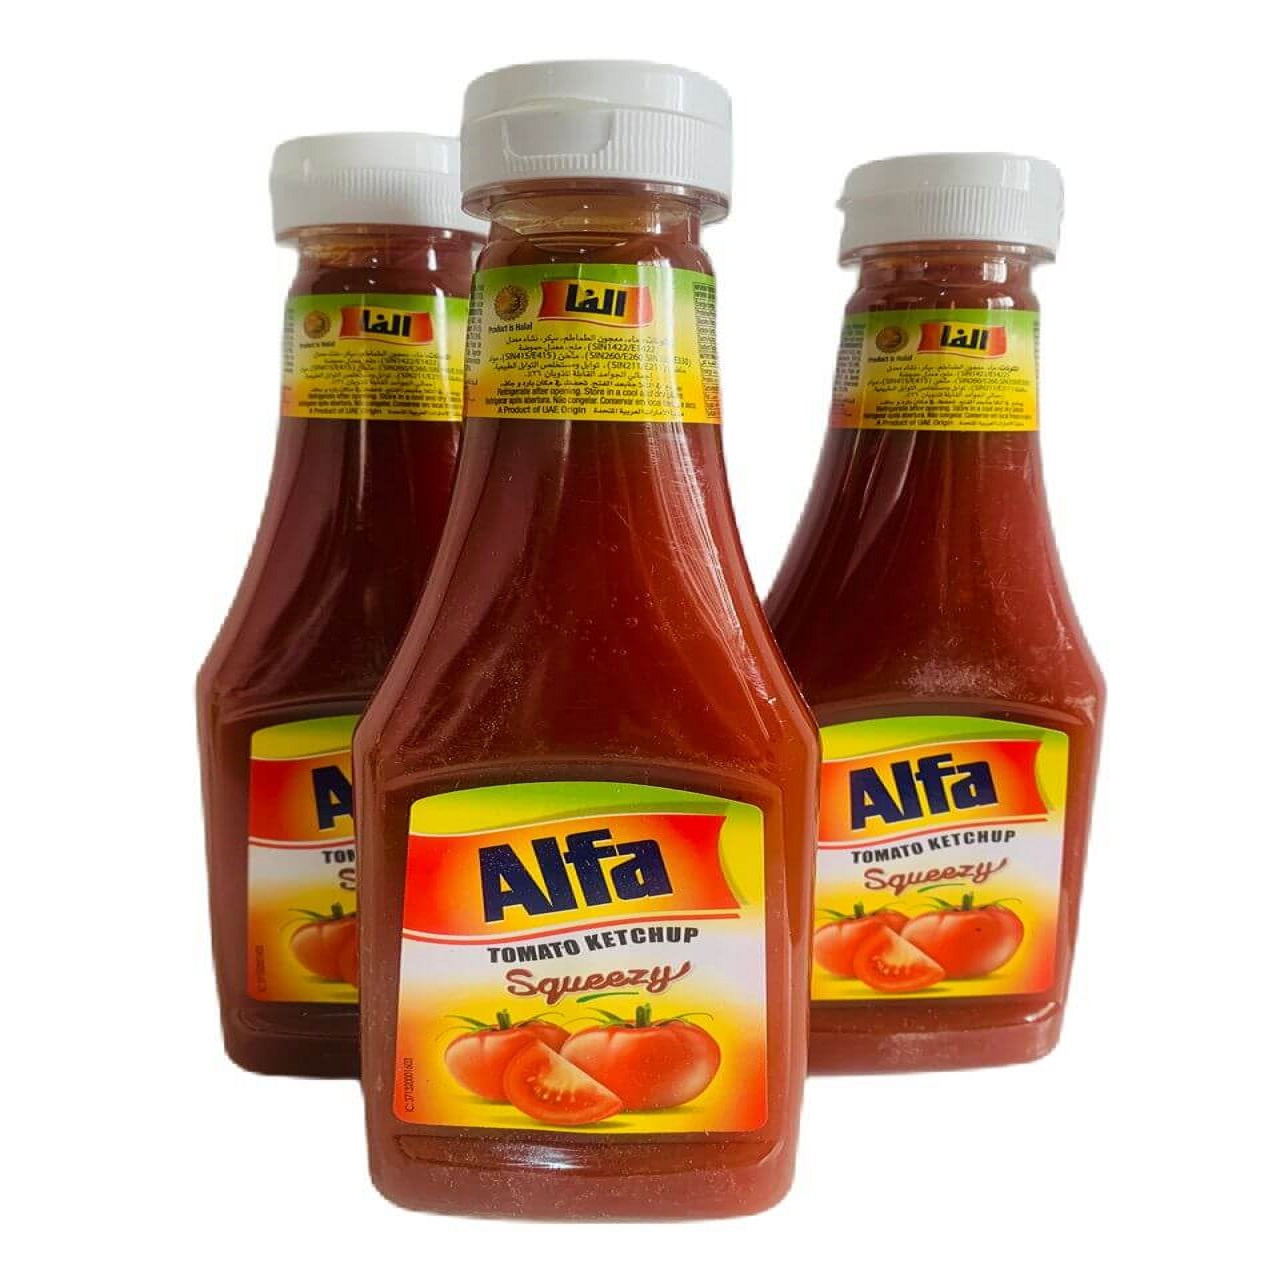 bottles of Alfa Tomato Ketchup